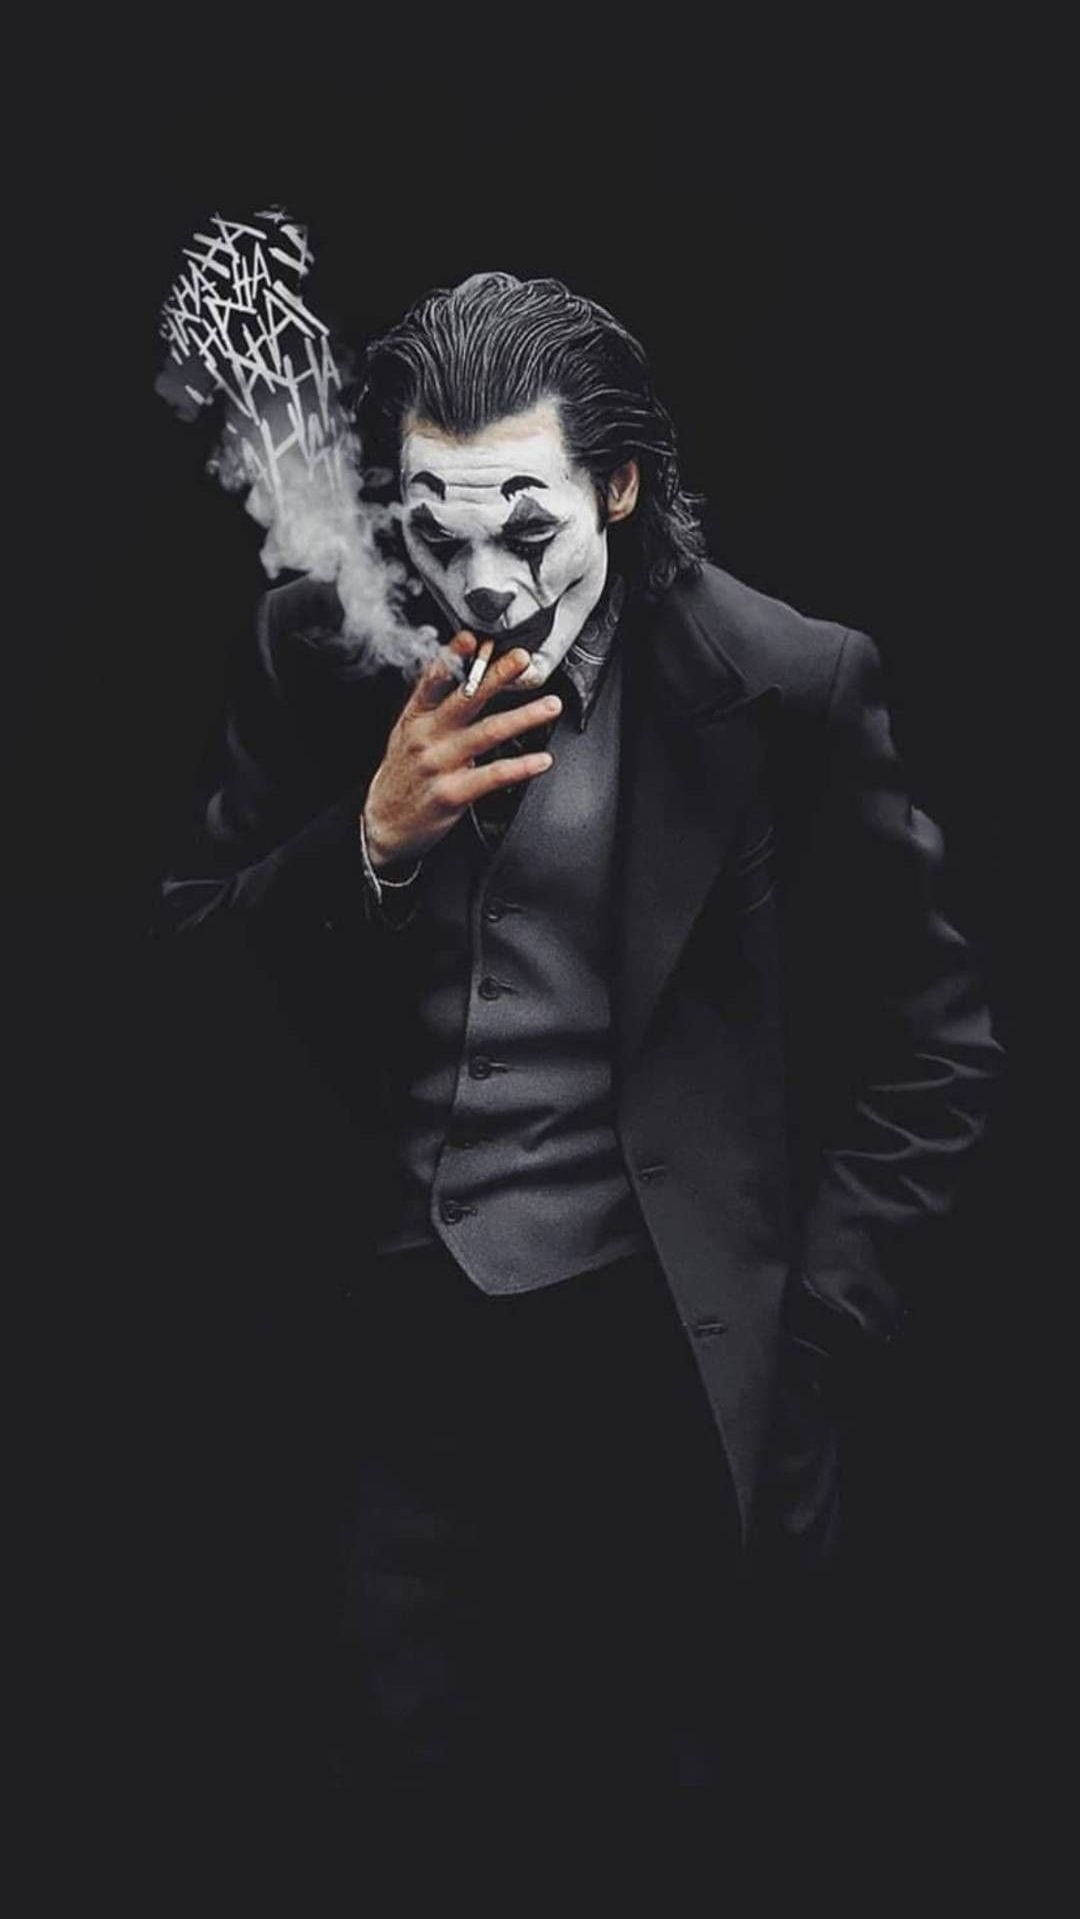 Sick Phone The Joker Smoking Background